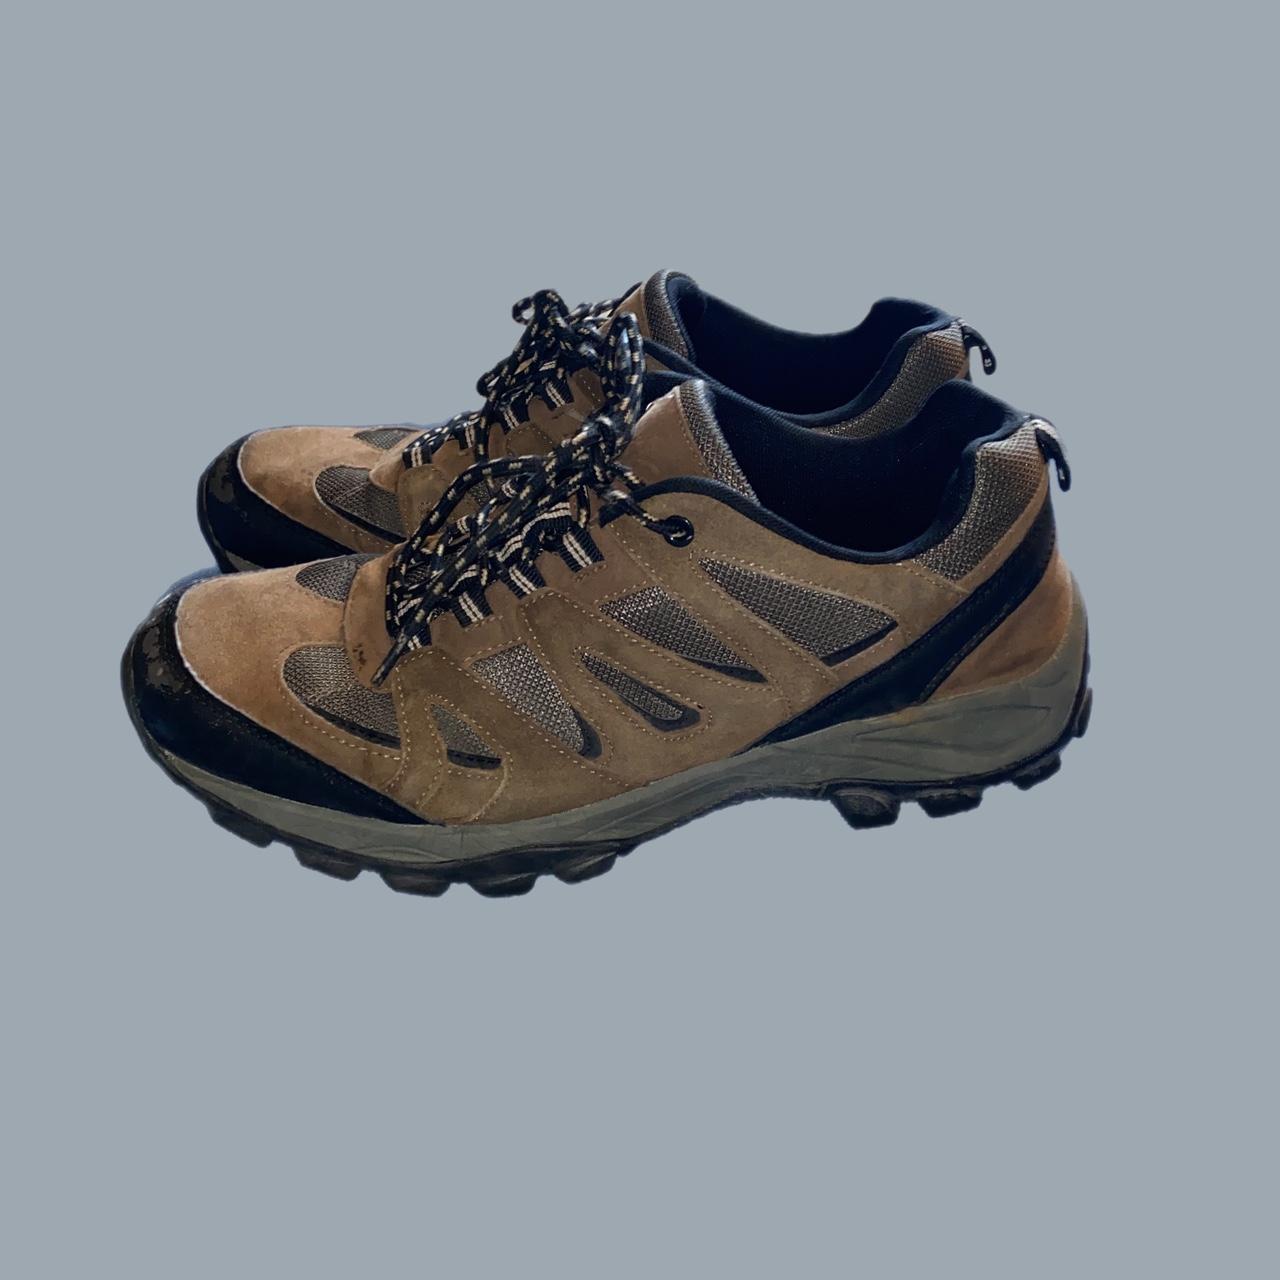 Itasca brown hiking shoes 🏜️ 10.5 men’s hiking shoes... - Depop